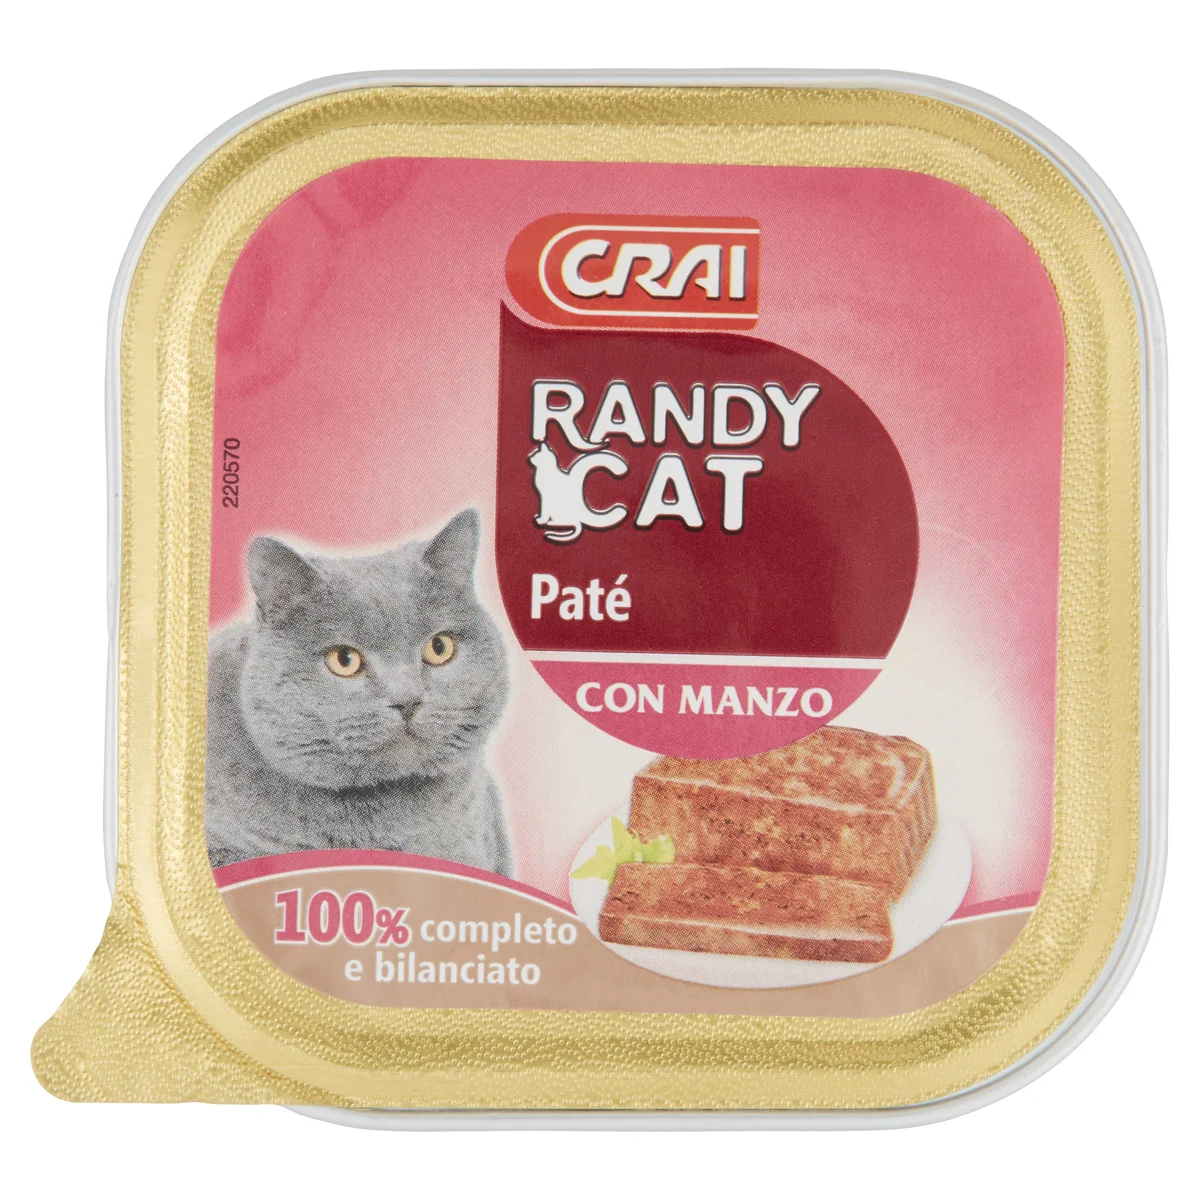 Crai Randy Cat Patè Con Manzo 100 g